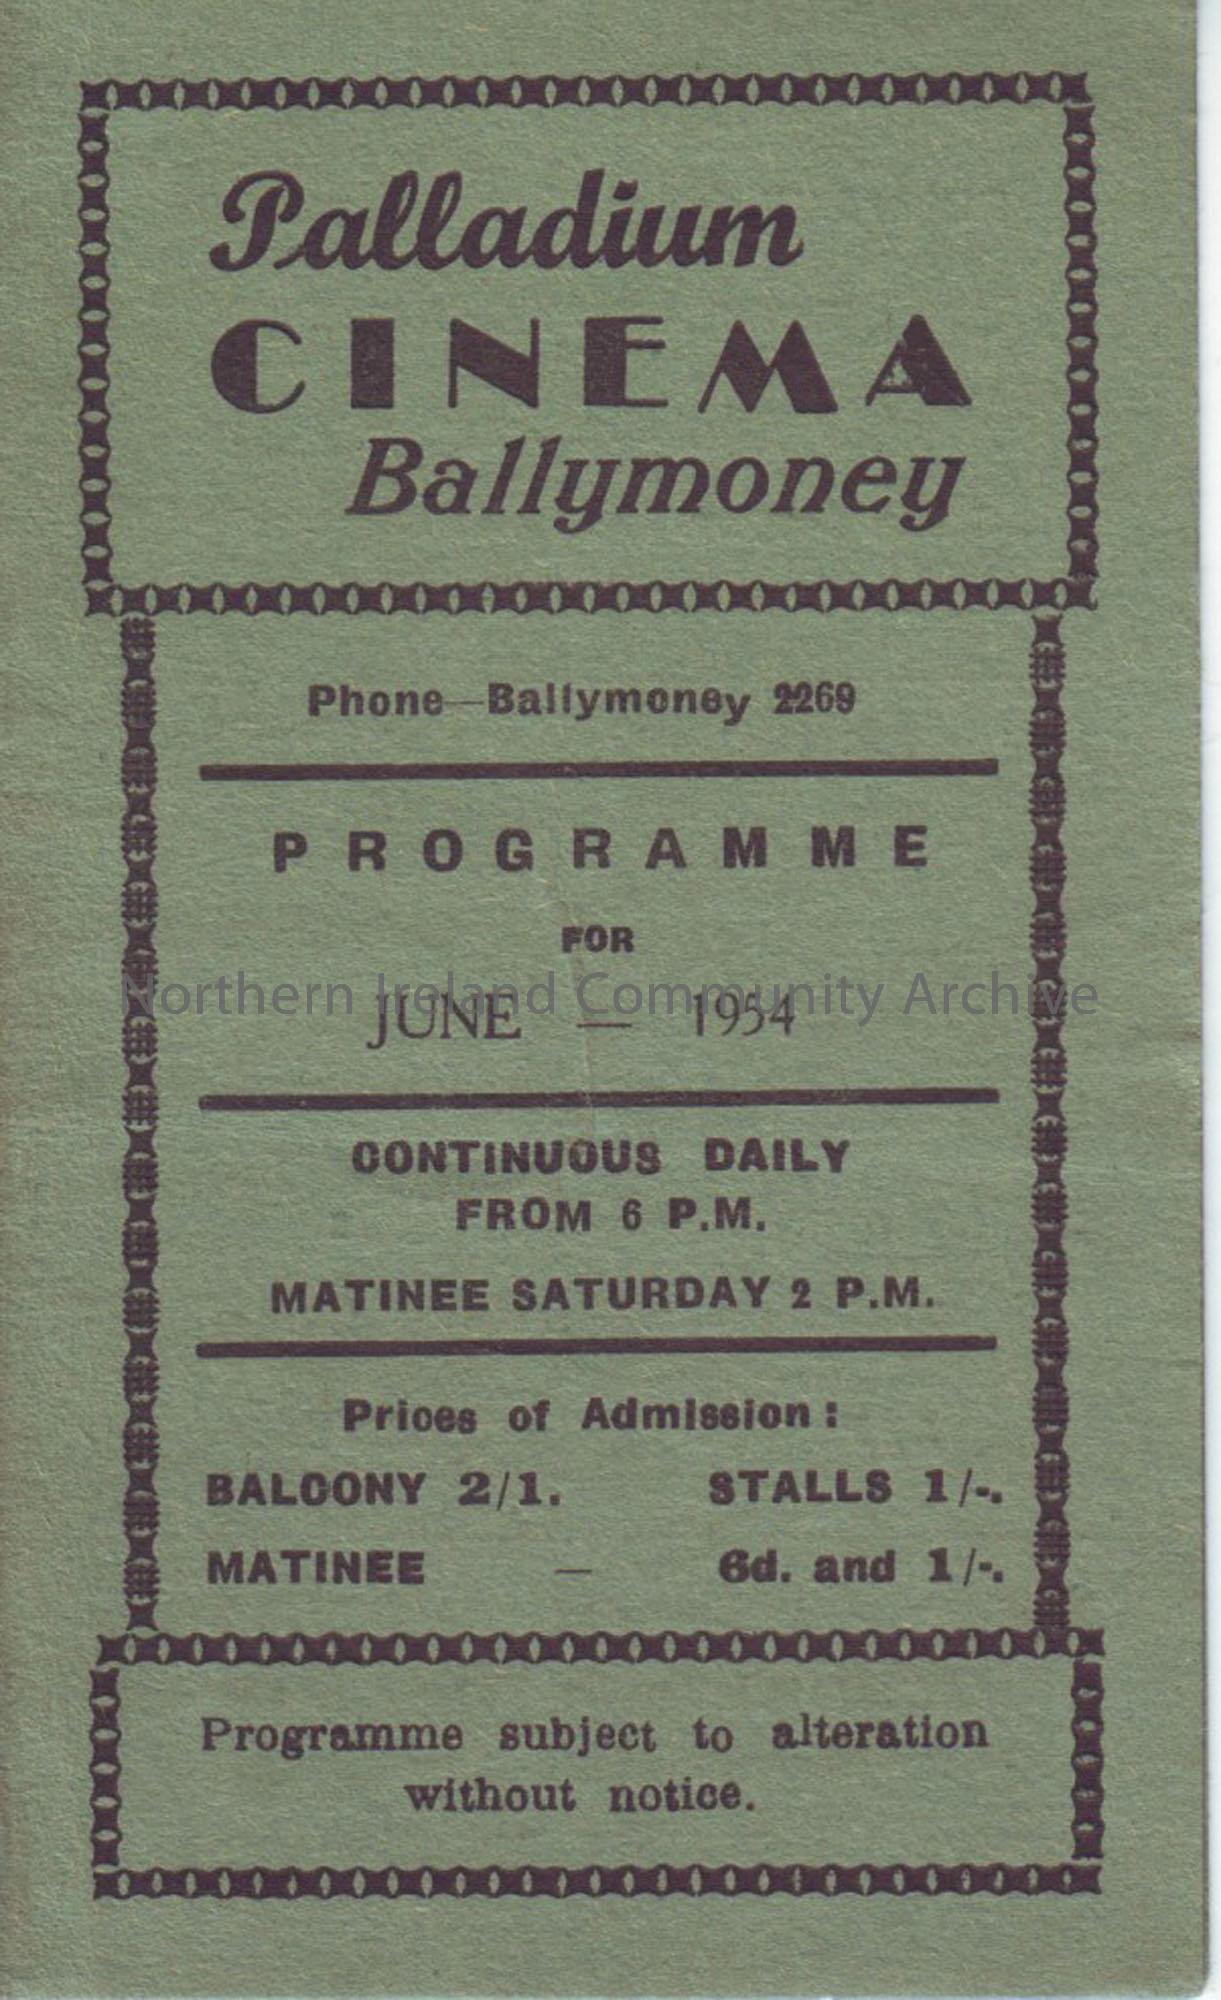 green monthly programme for Ballymoney Palladium cinema- June 1954